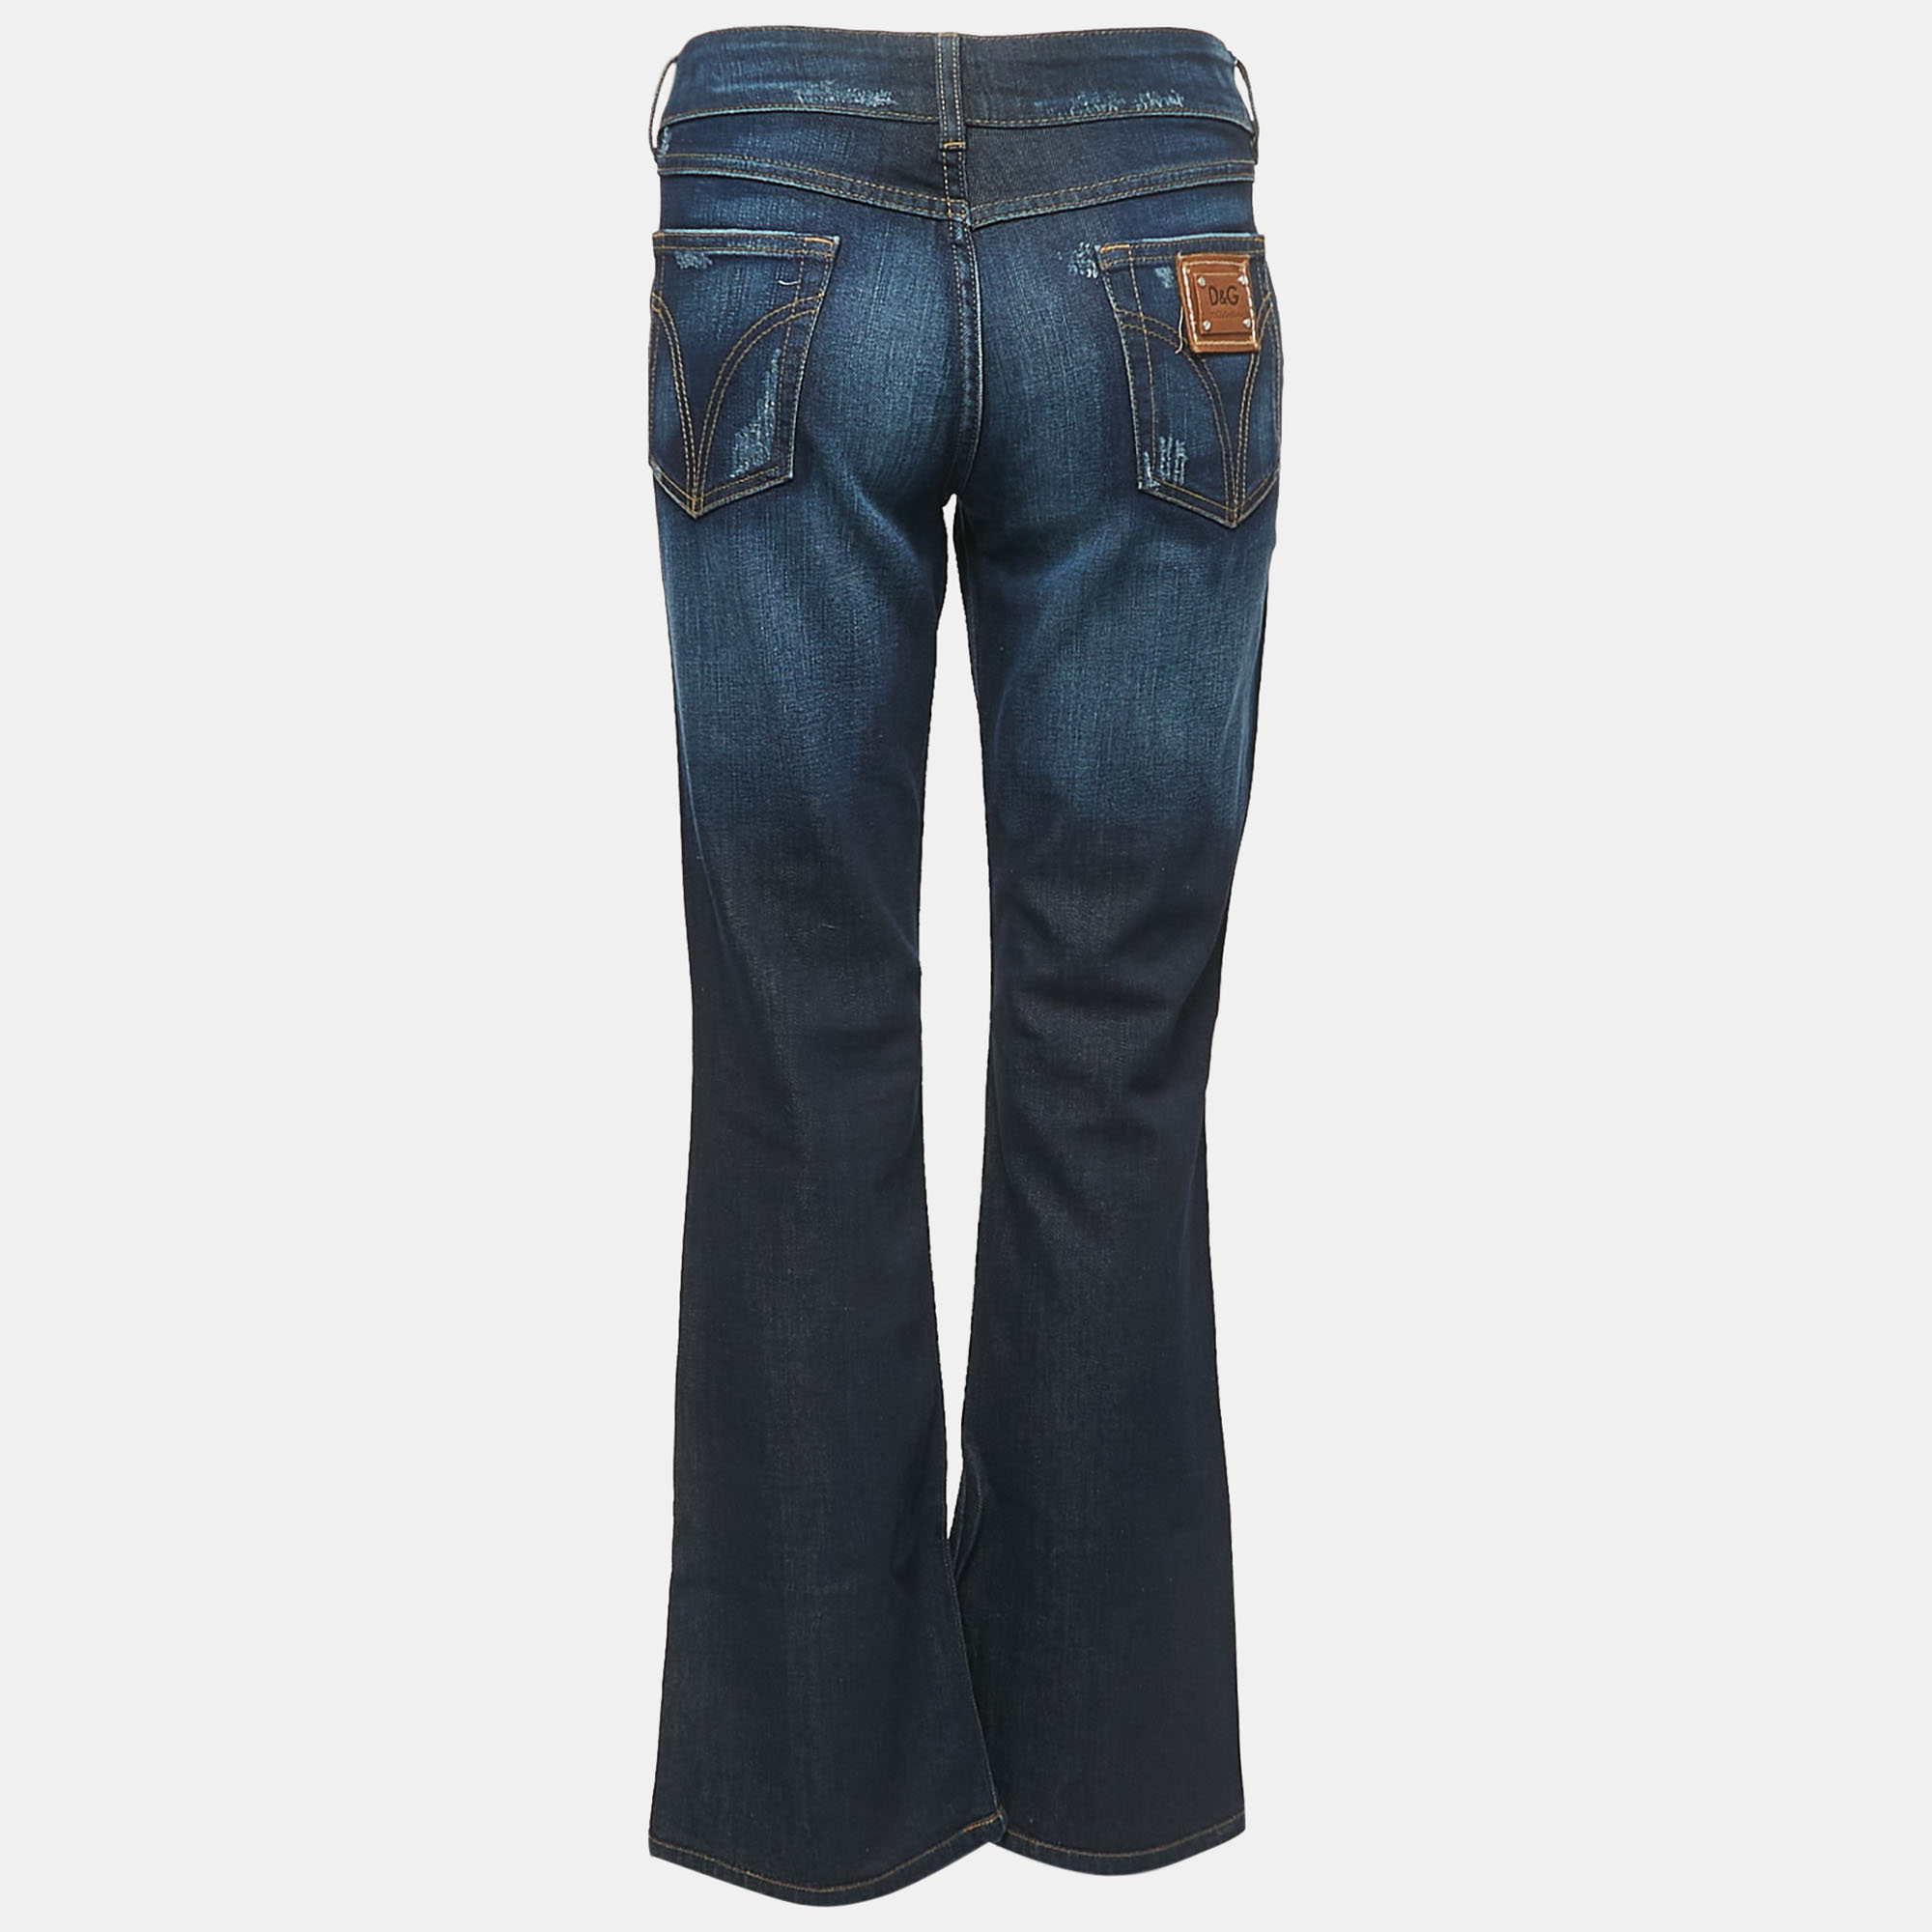 

D&G Dark Blue Distressed Denim Very Low Rise Boot-Cut Jeans  Waist 31